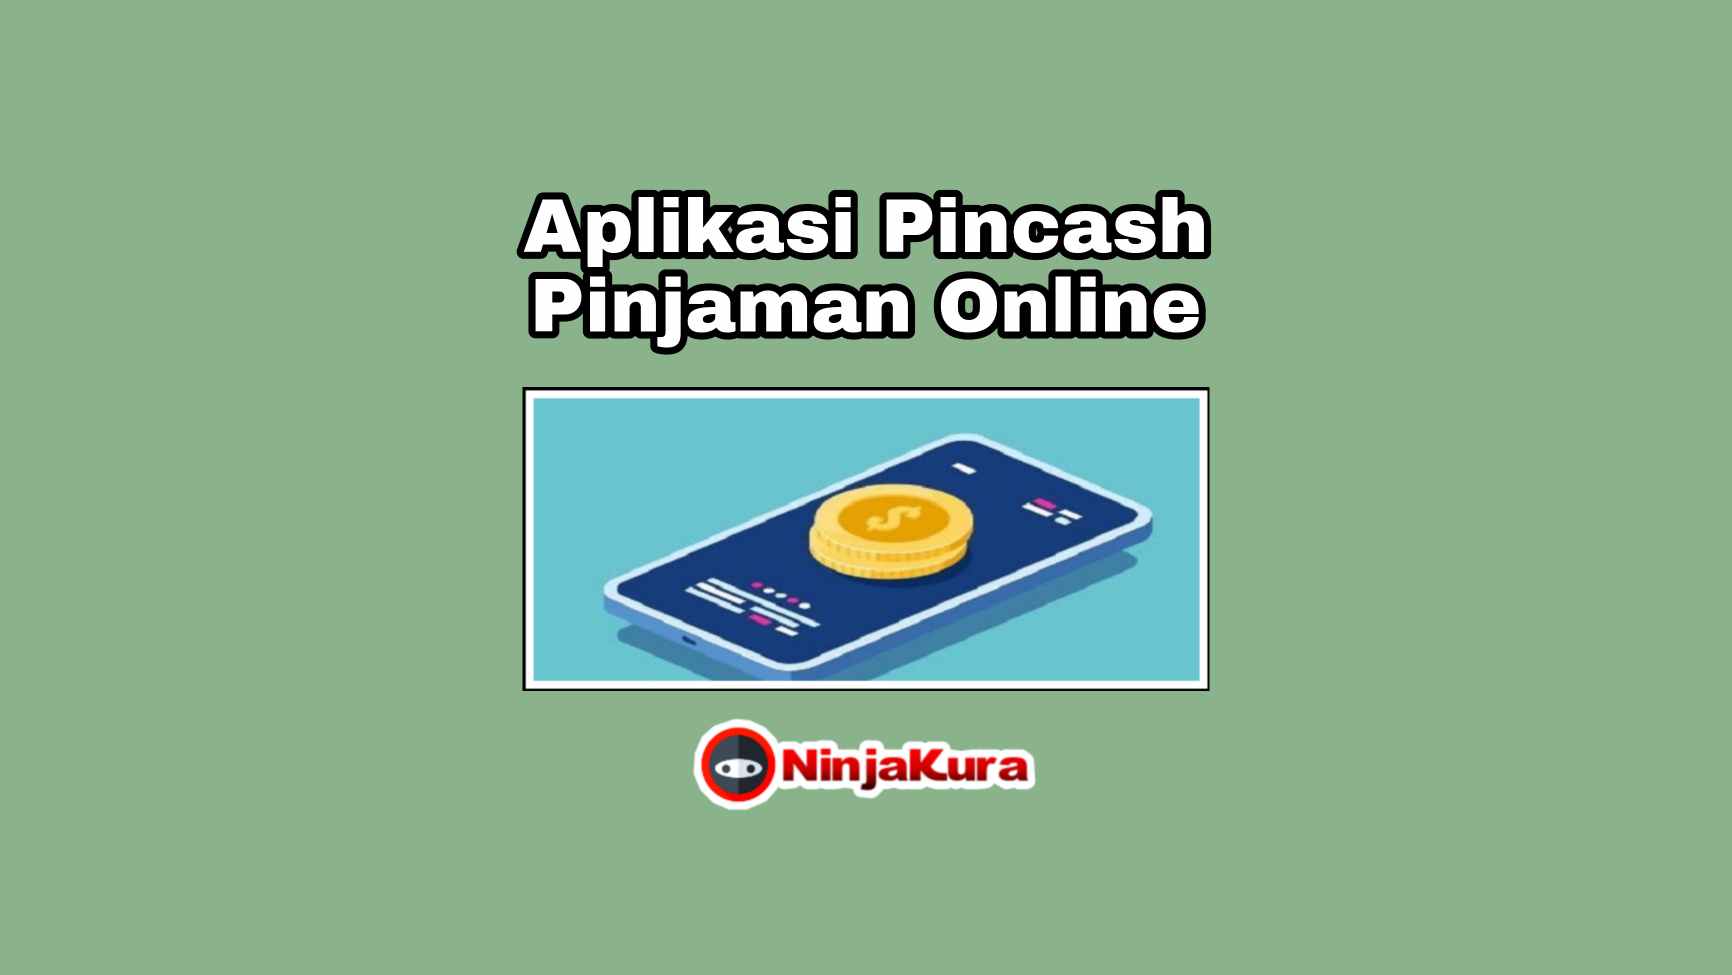 Apk Pincash Download, Pinjaman Uang Online Limit 5 Juta 2021 NinjaKura